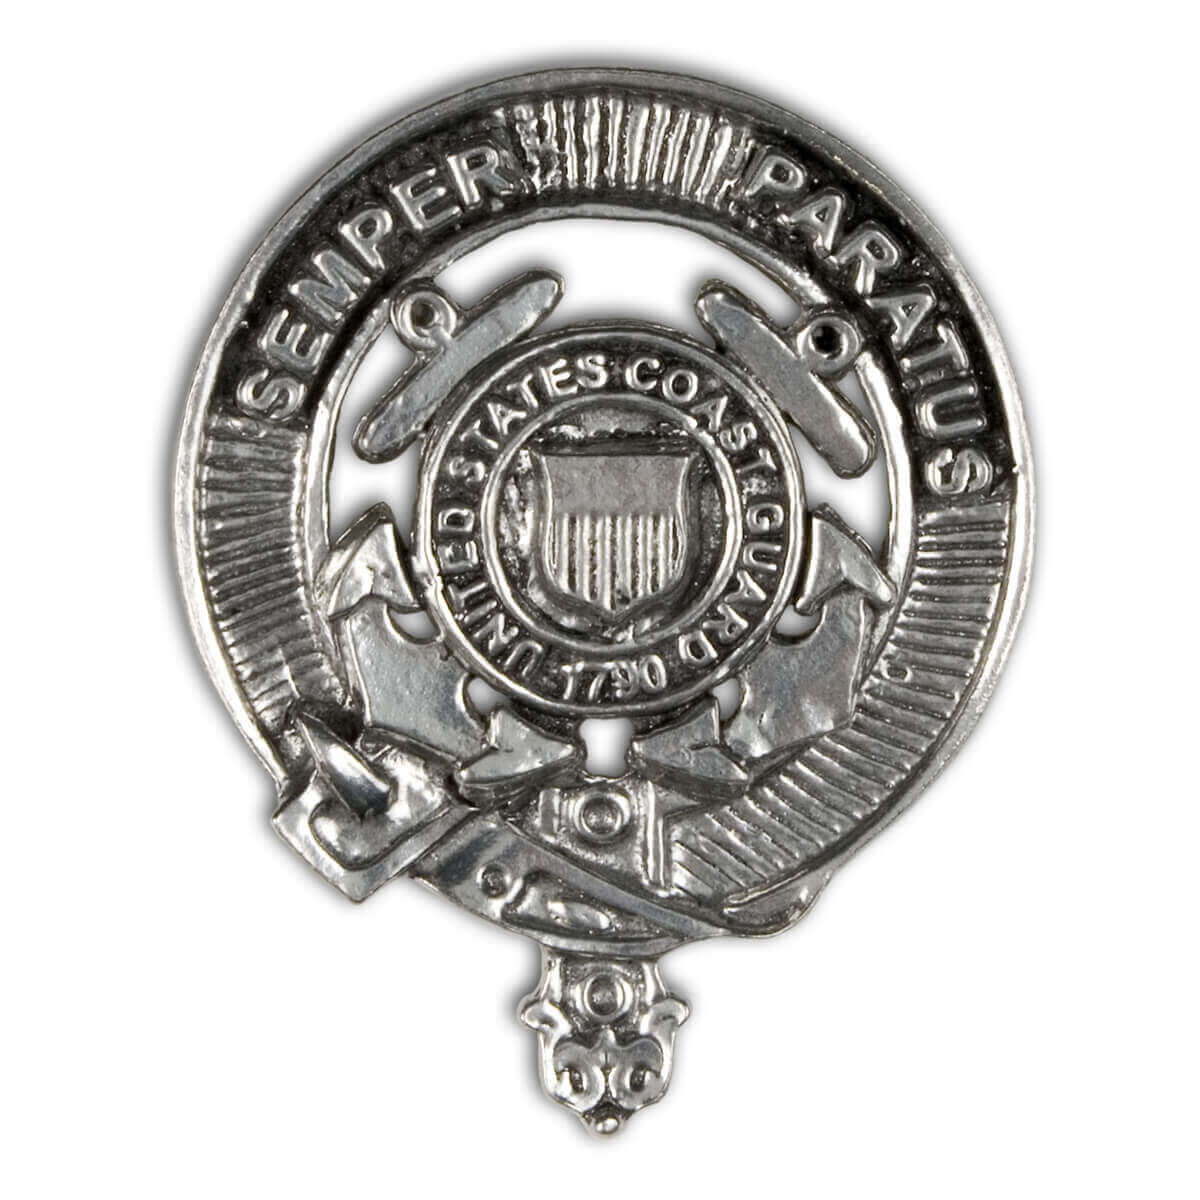 U.S. Coast Guard Sterling Silver Cap Badge/Brooch